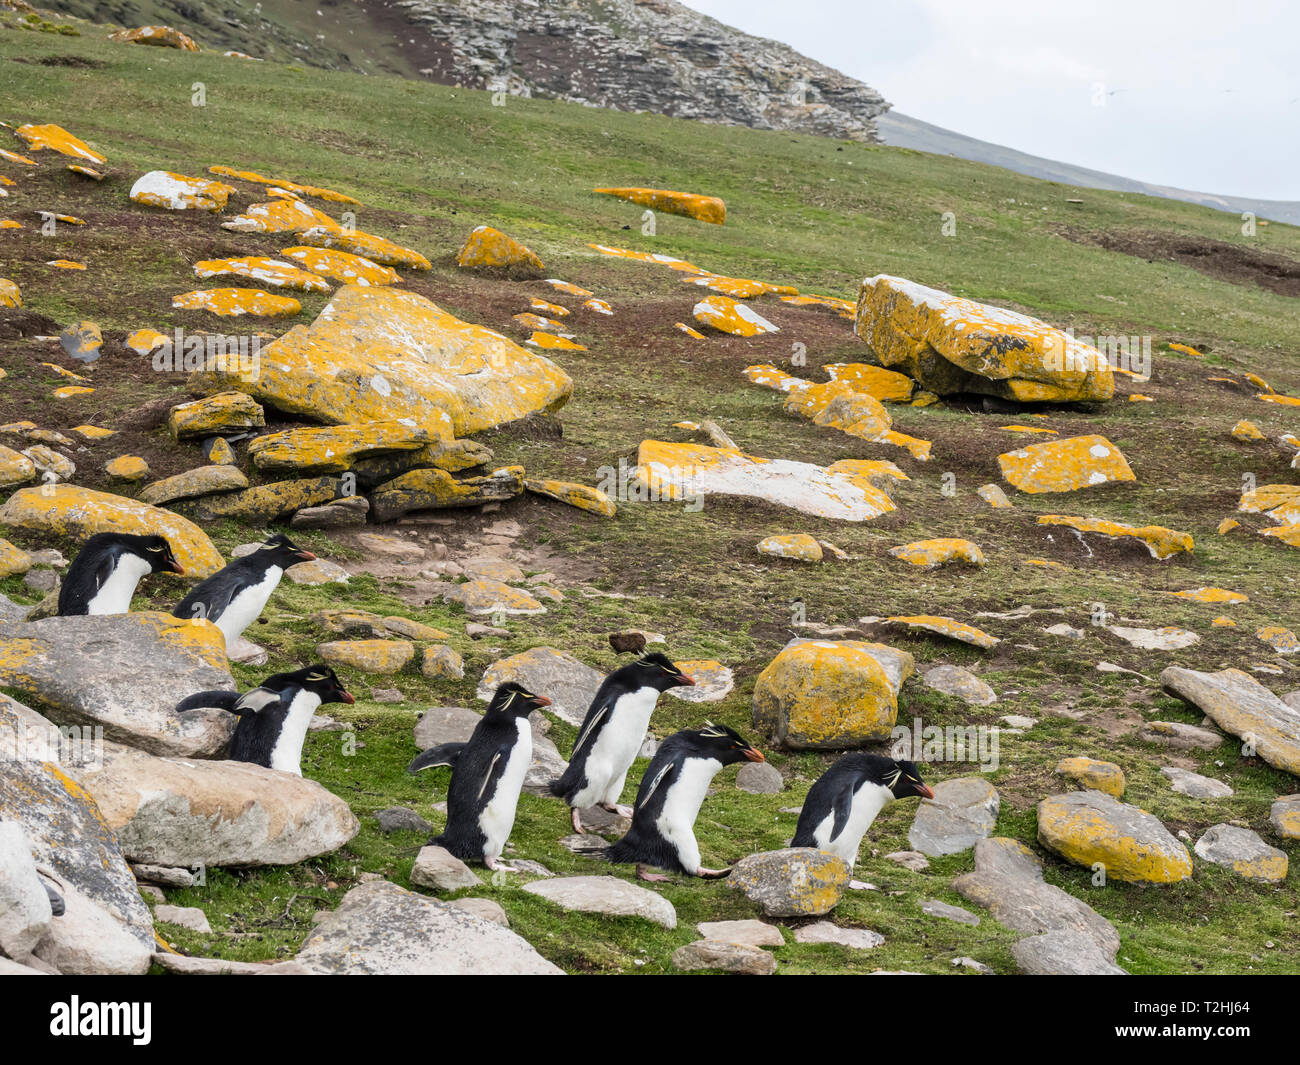 Southern rockhopper penguins, Eudyptes chrysocome, at rookery on Saunders Island, Falkland Islands, South Atlantic Ocean Stock Photo